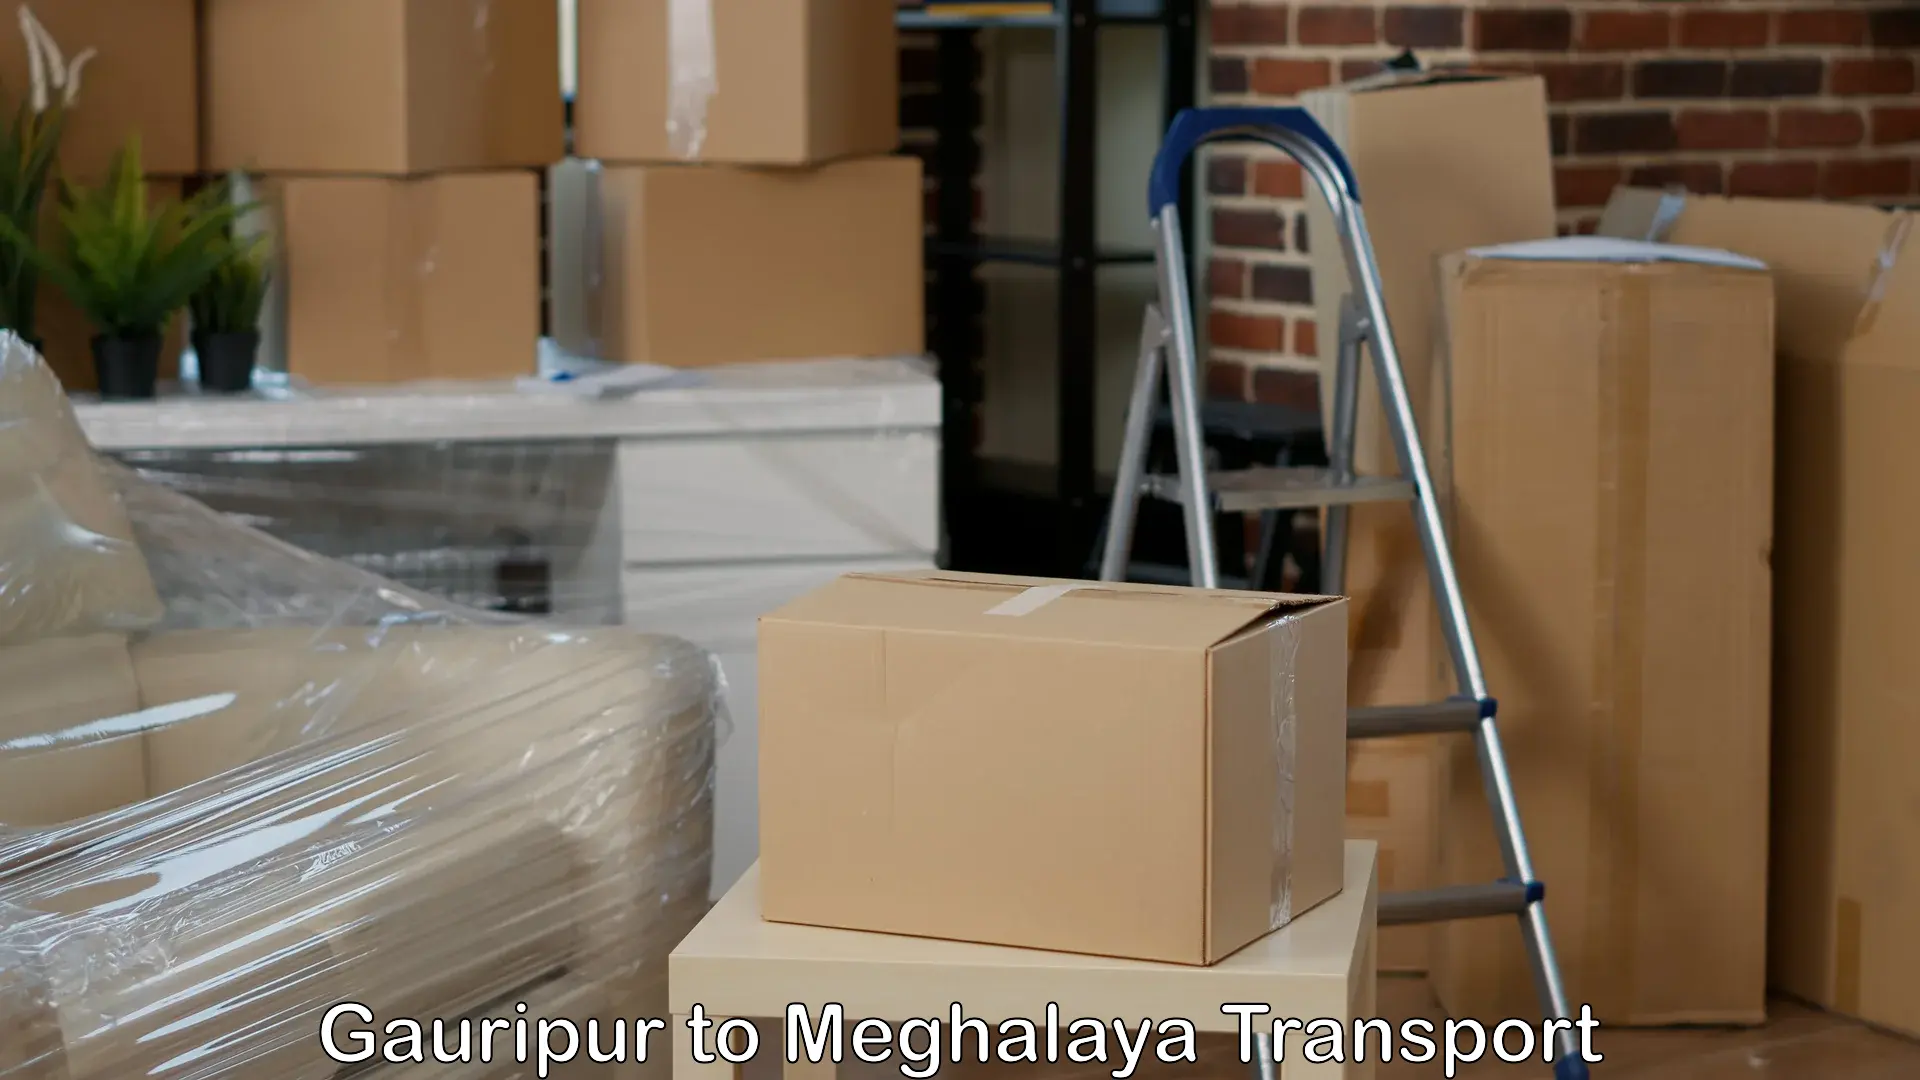 Cycle transportation service Gauripur to Meghalaya